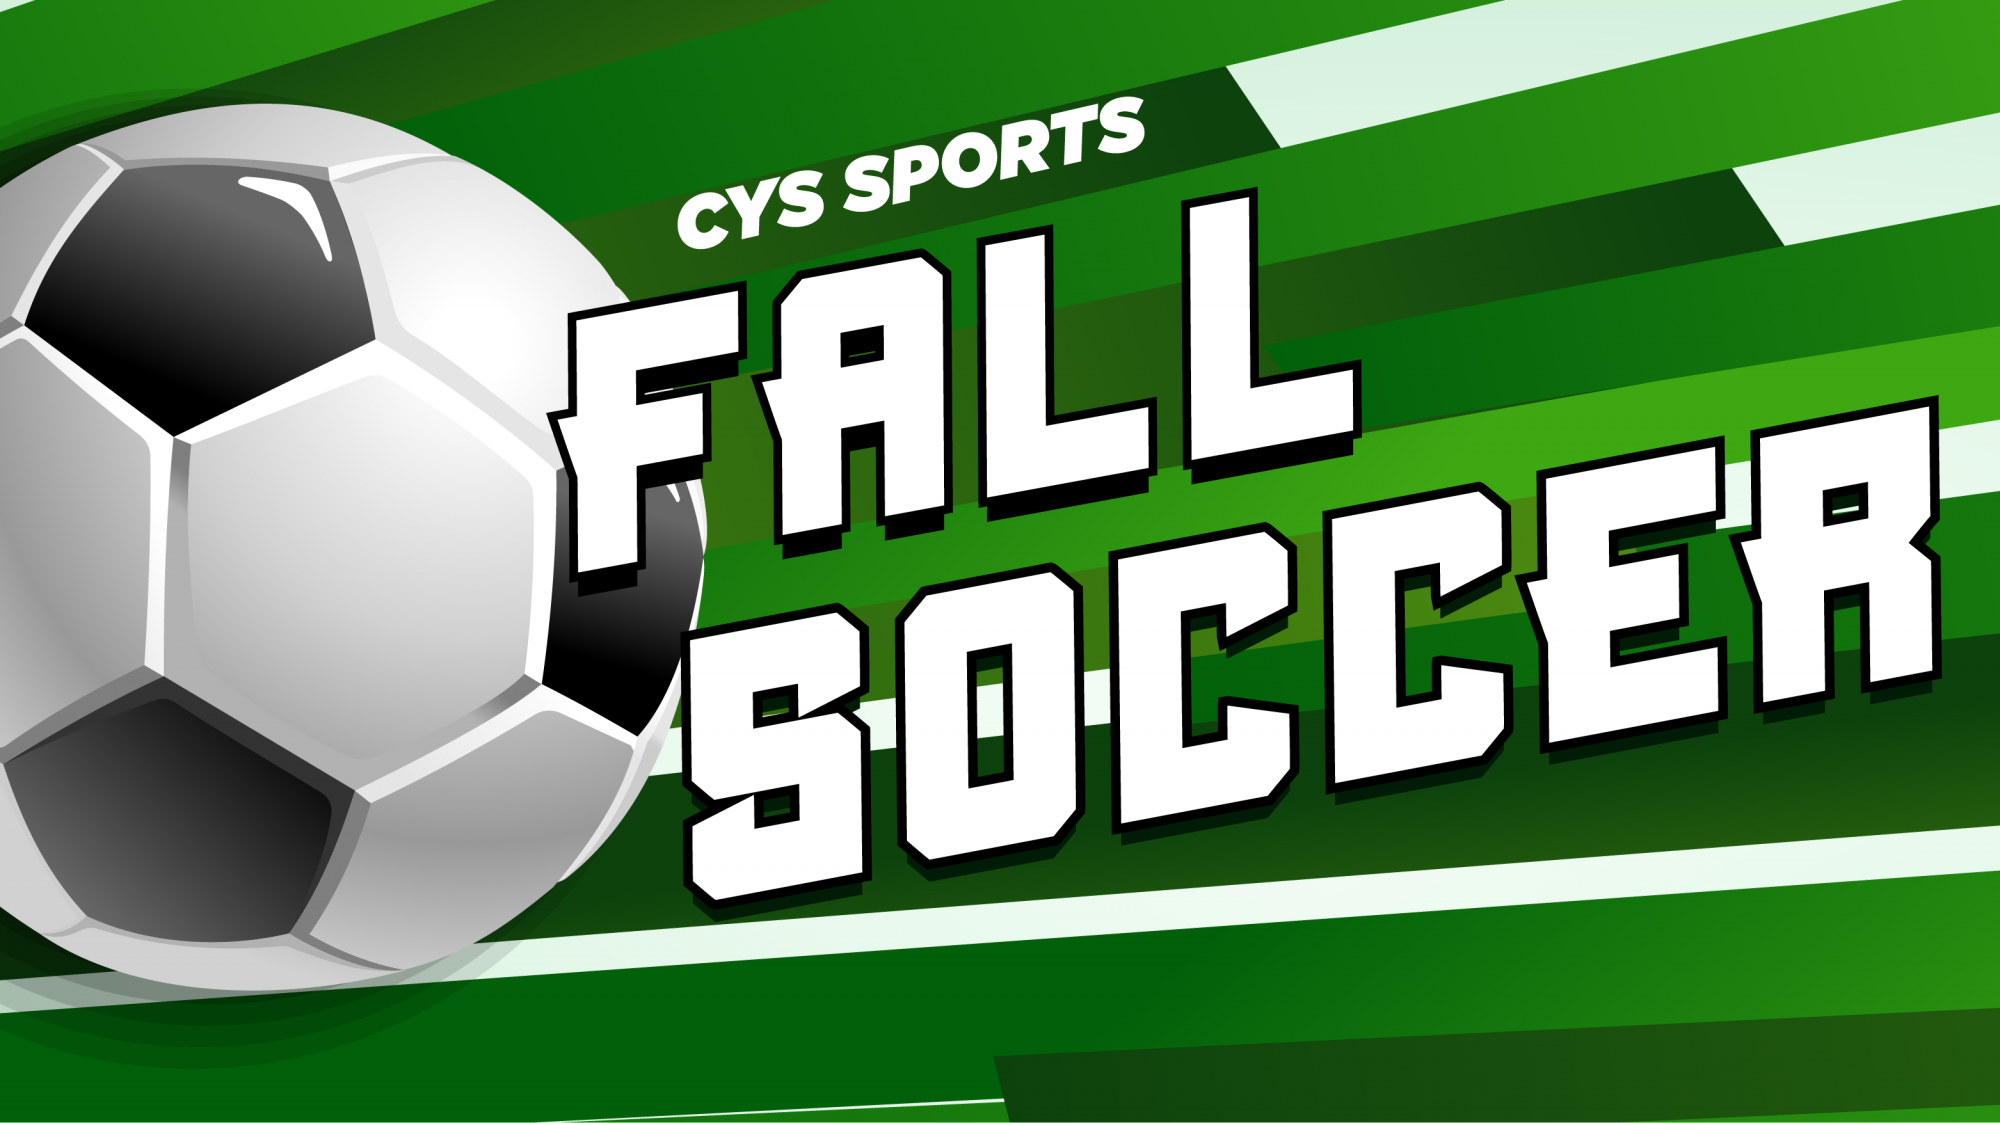 CYS Sports Fall Soccer Ft